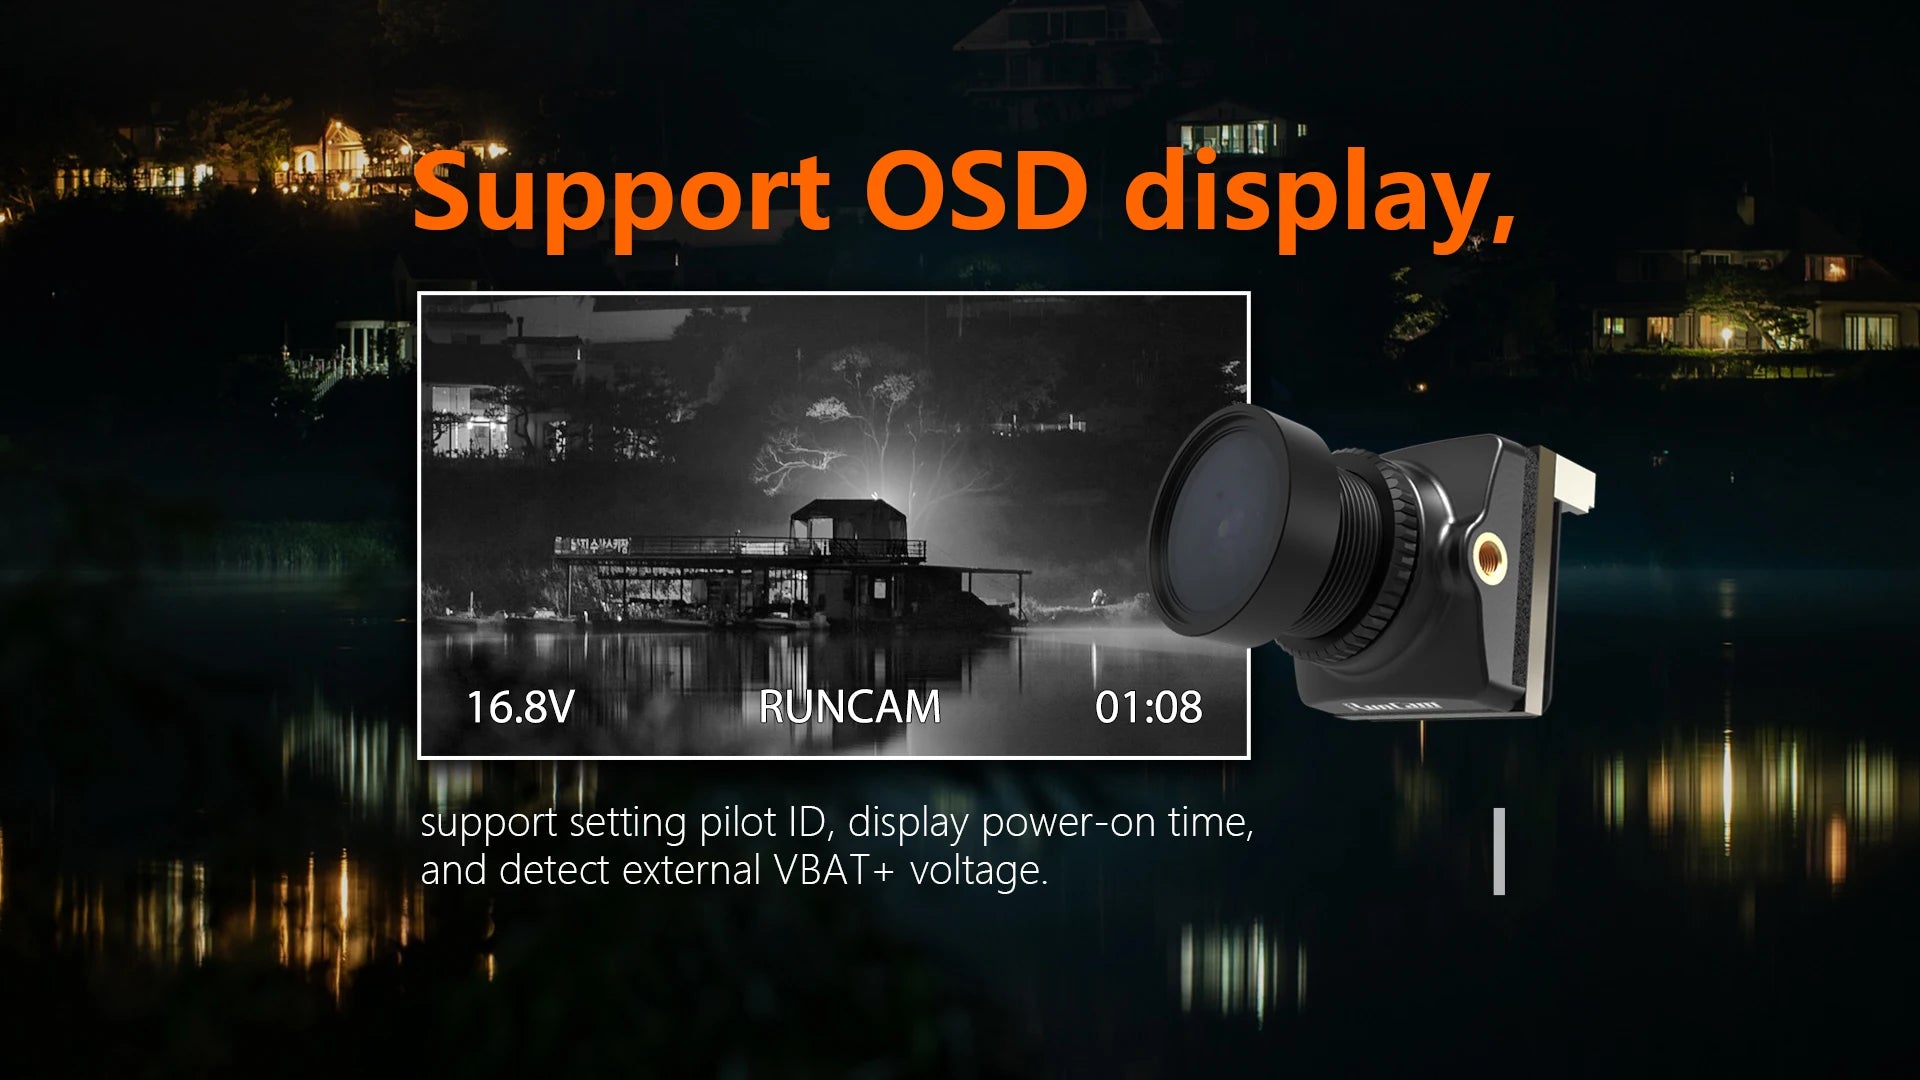 RunCam NightEagle 3 Analog Camera, Support OSD display, 41n138 16.81 RUNCAM 01.08 support setting pilot